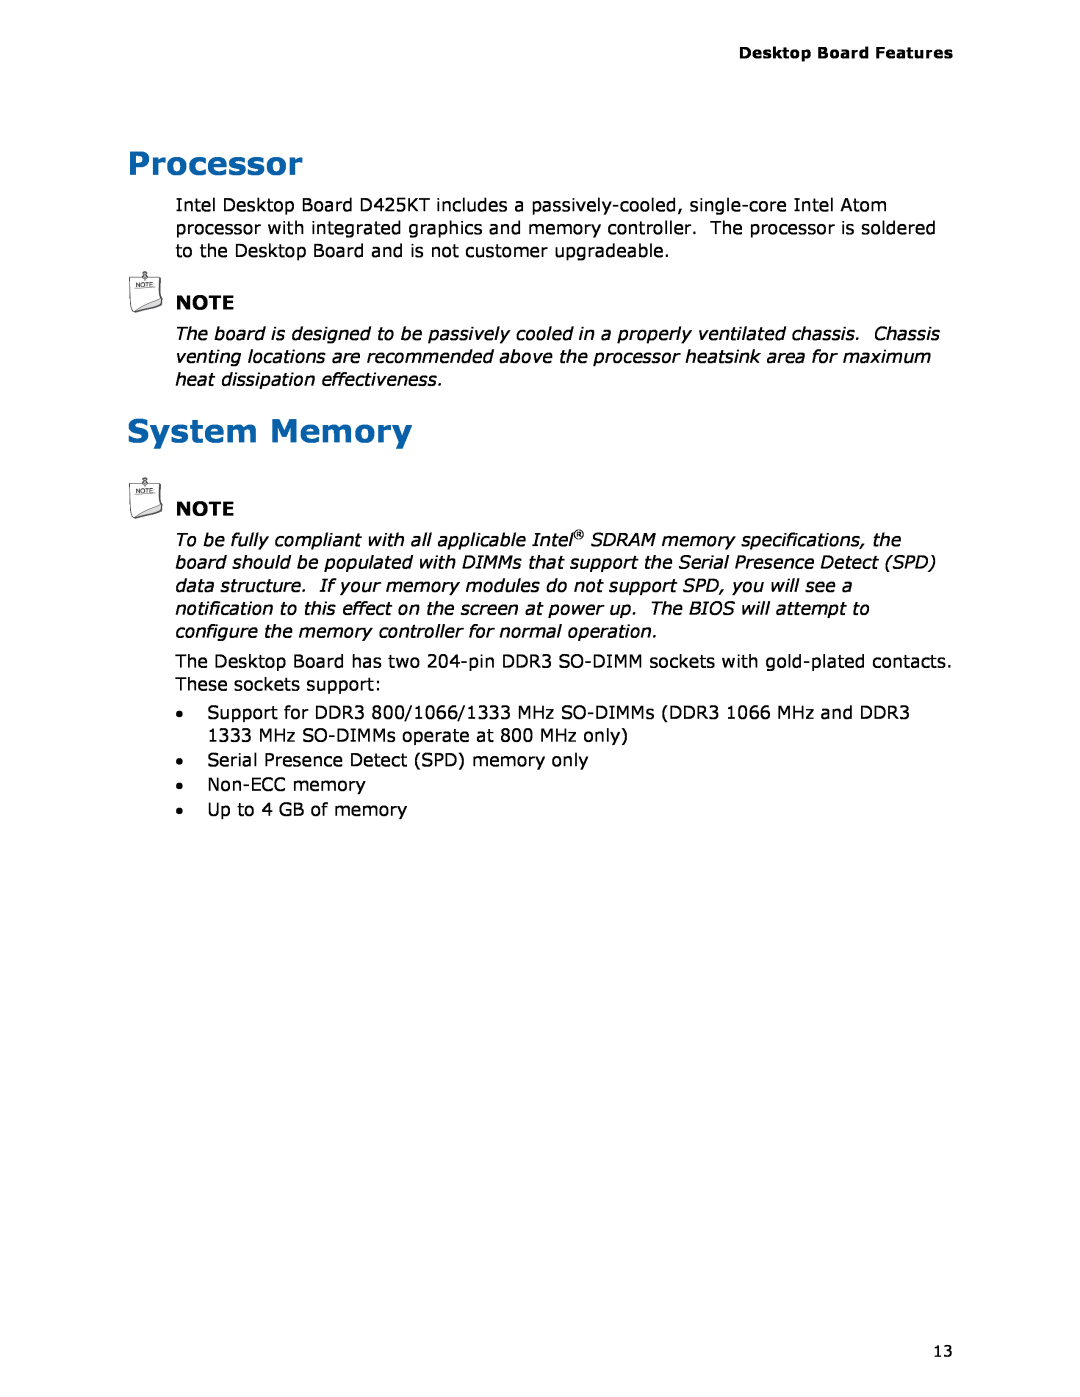 Intel D425KT manual Processor, System Memory 